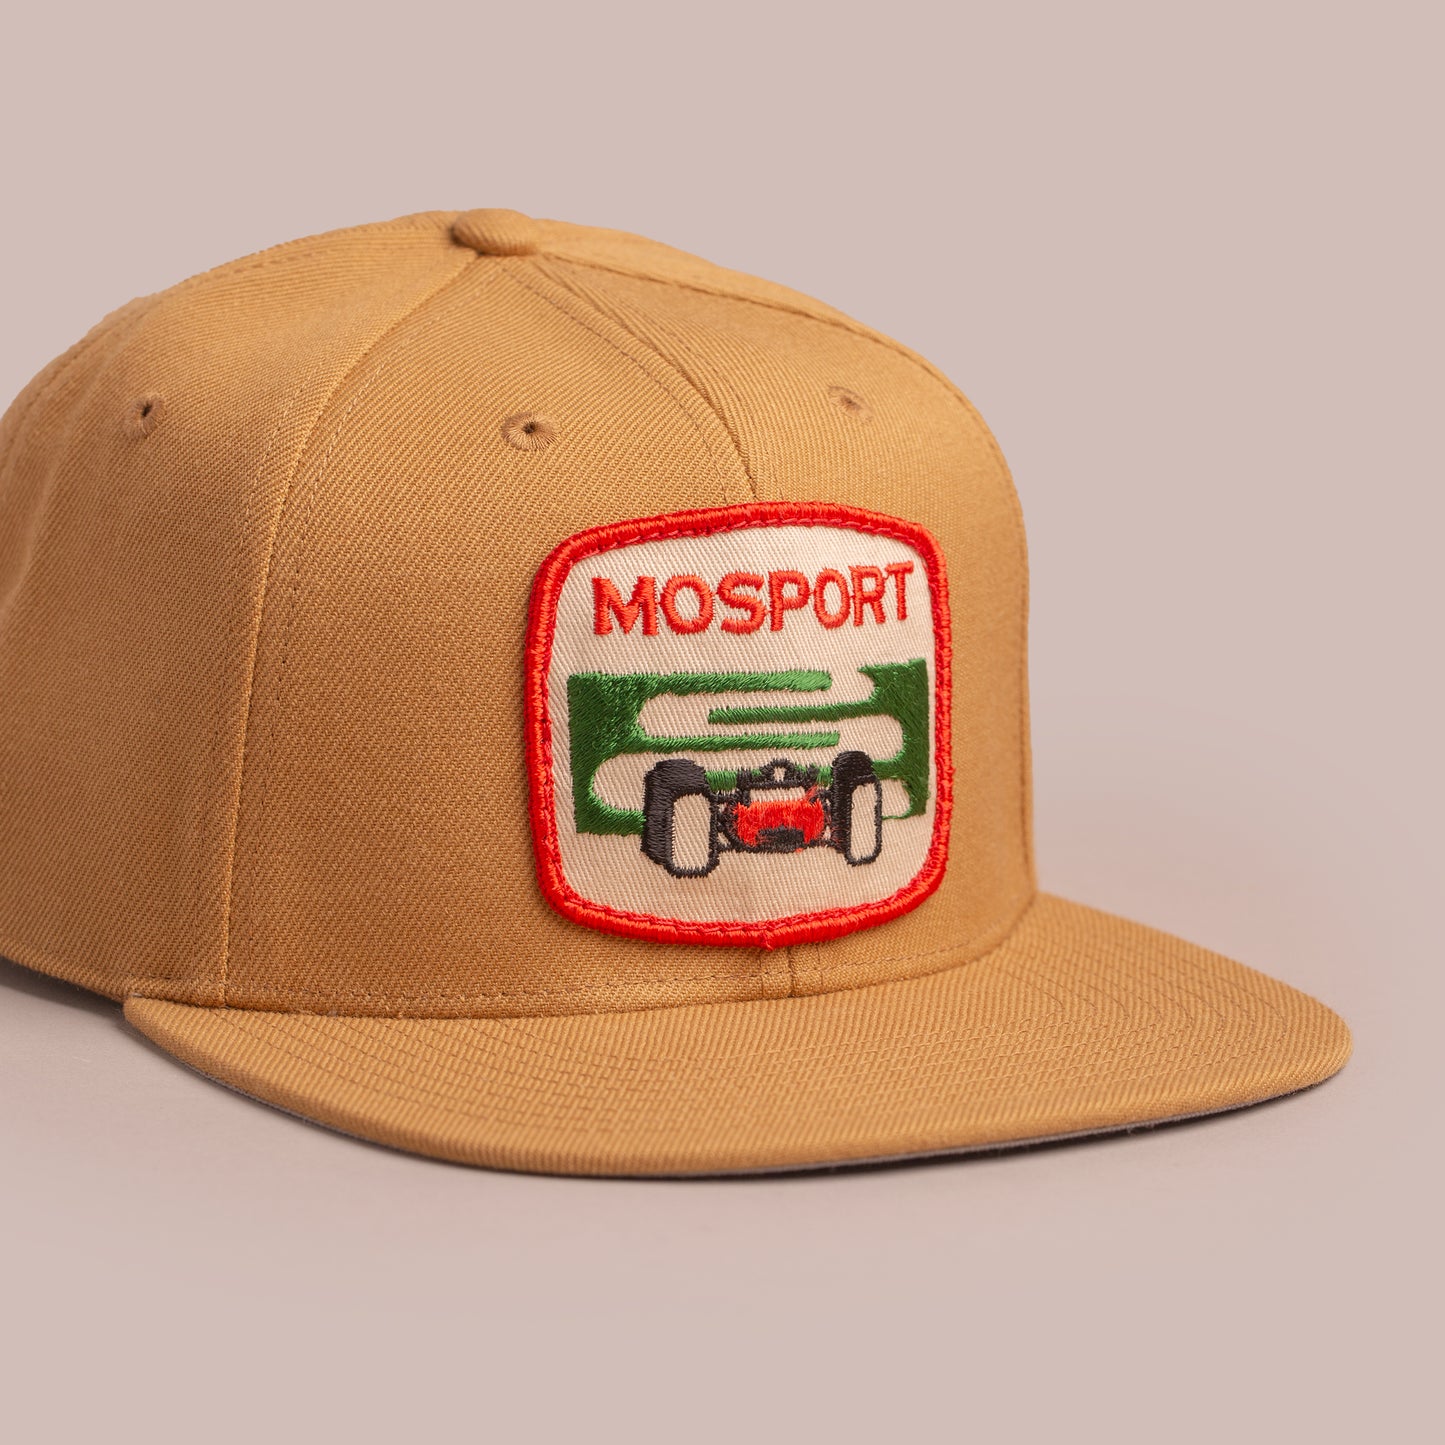 Mosport Snapback Hat